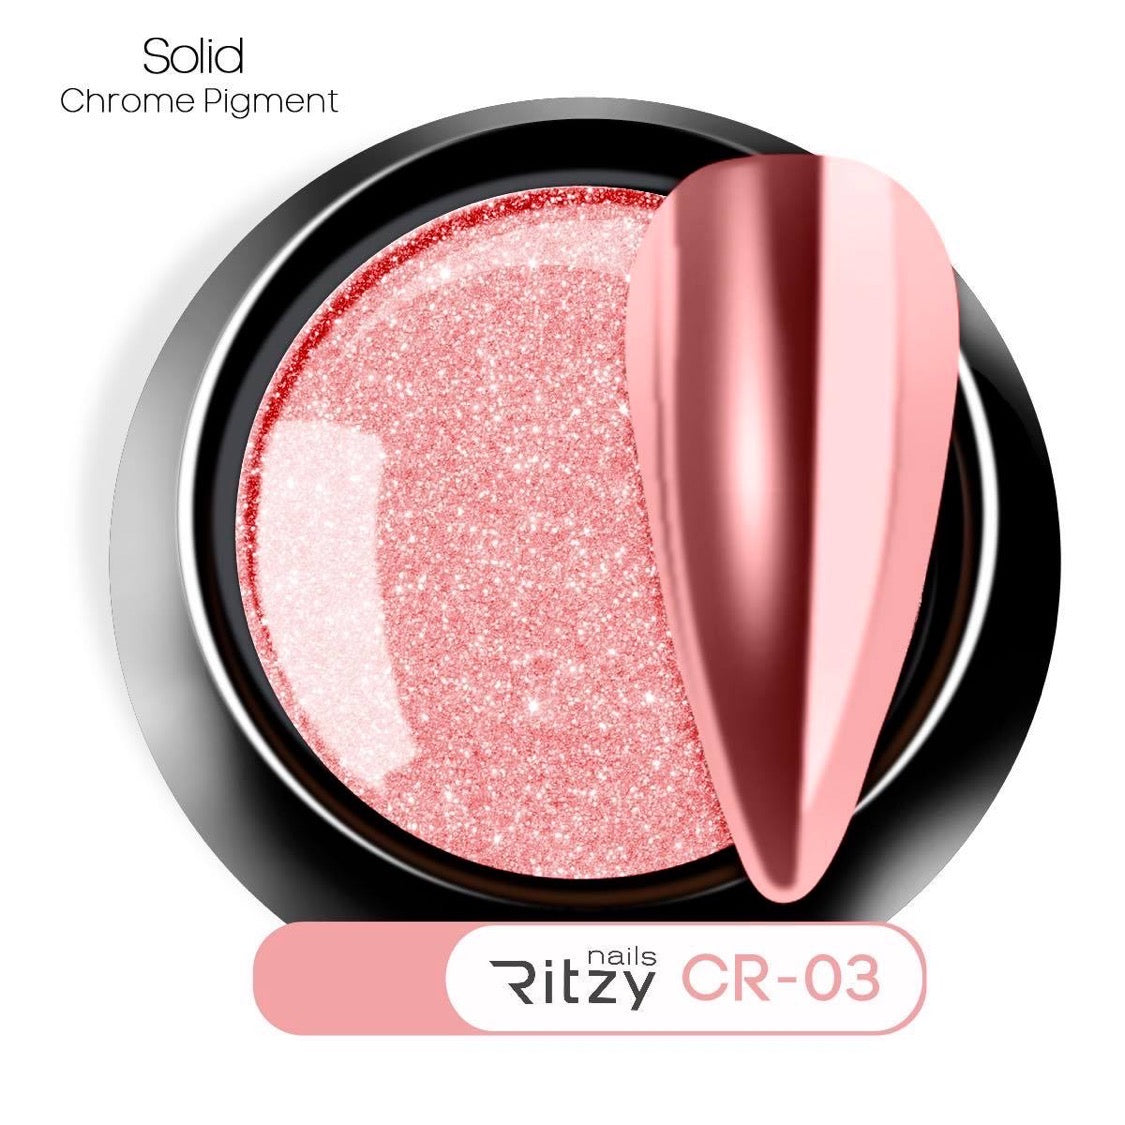 Chrome pigment CR-03